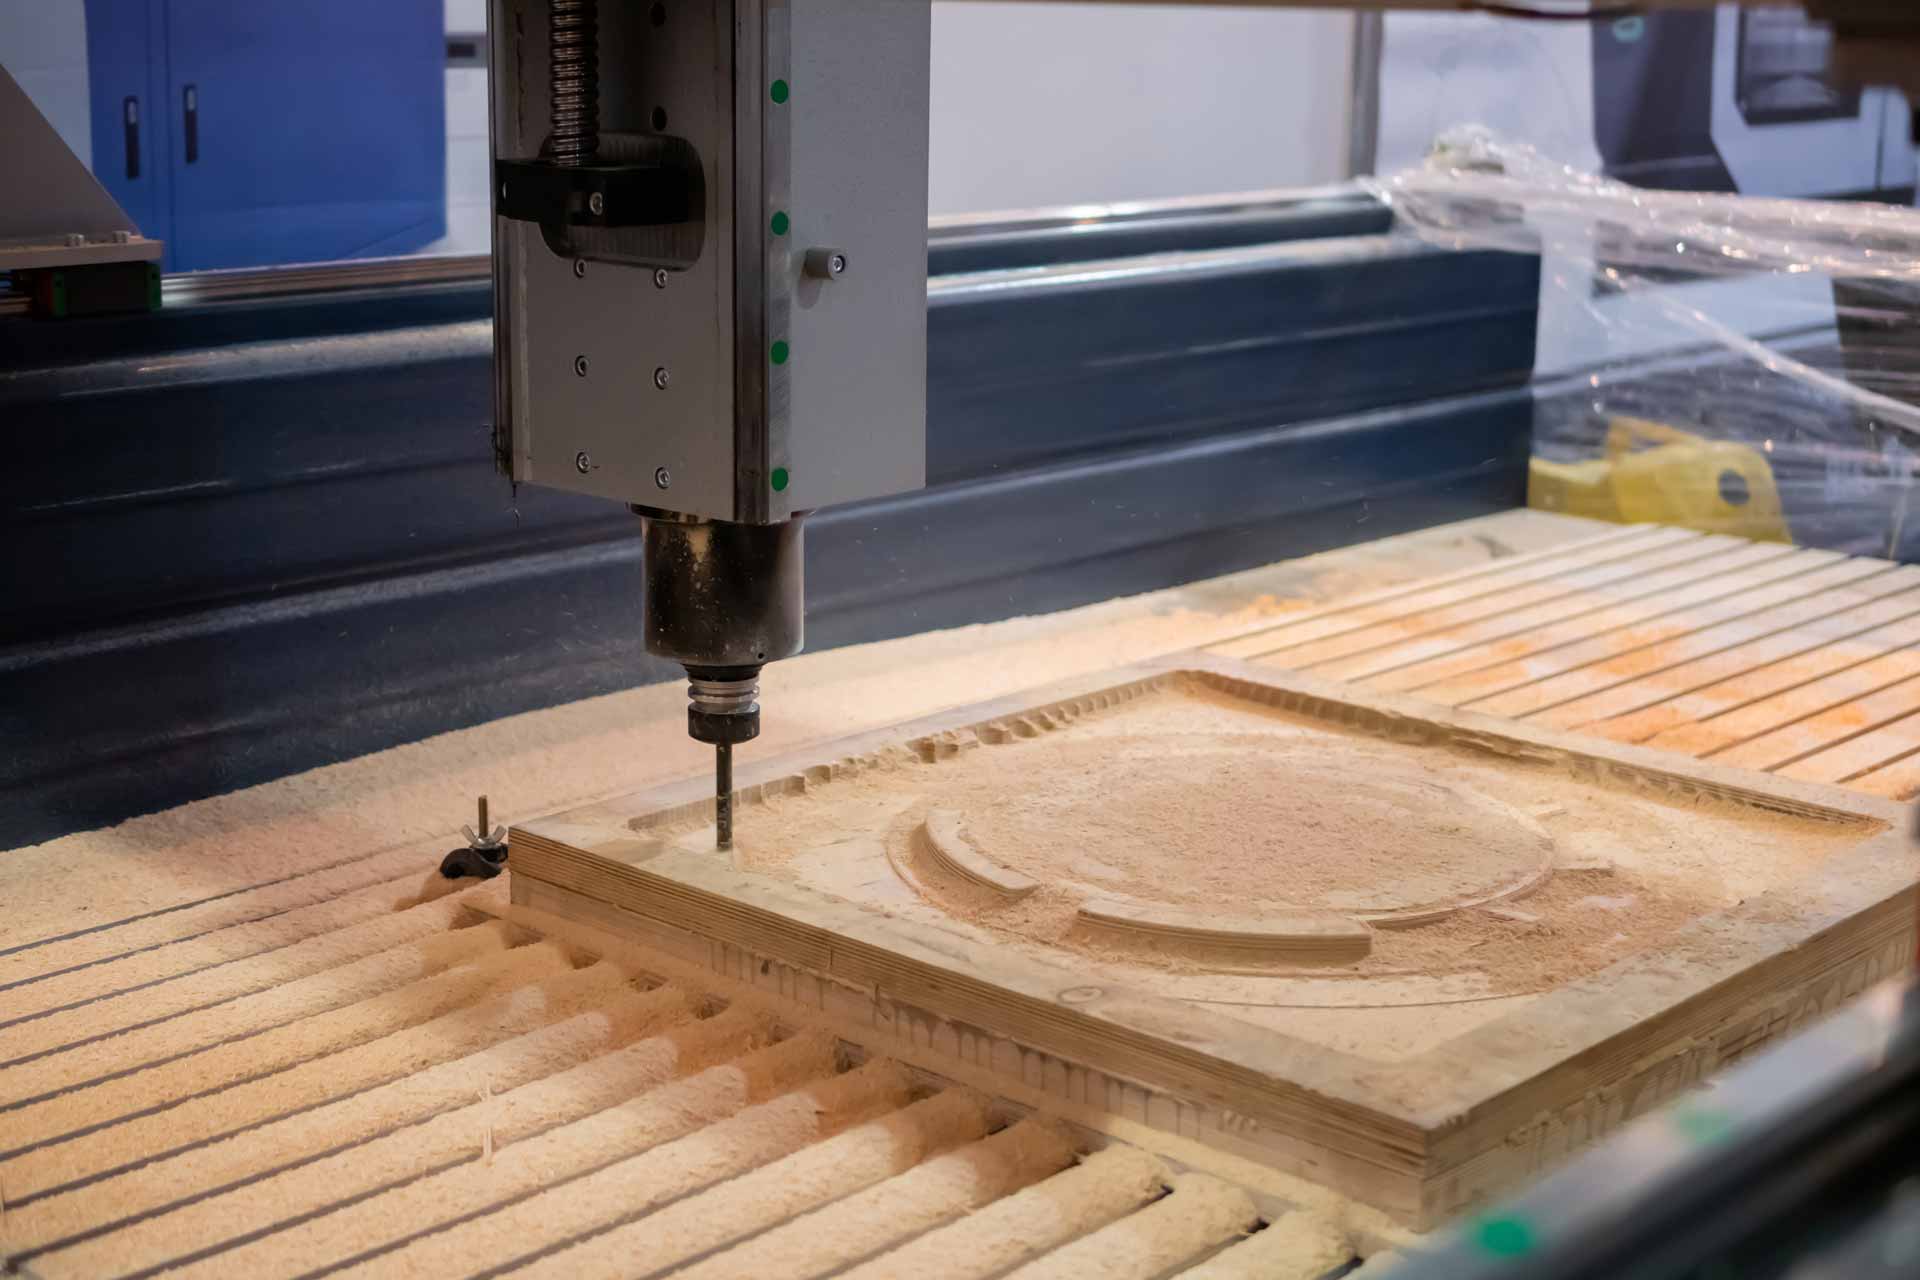 CNC machine milling a piece of wood